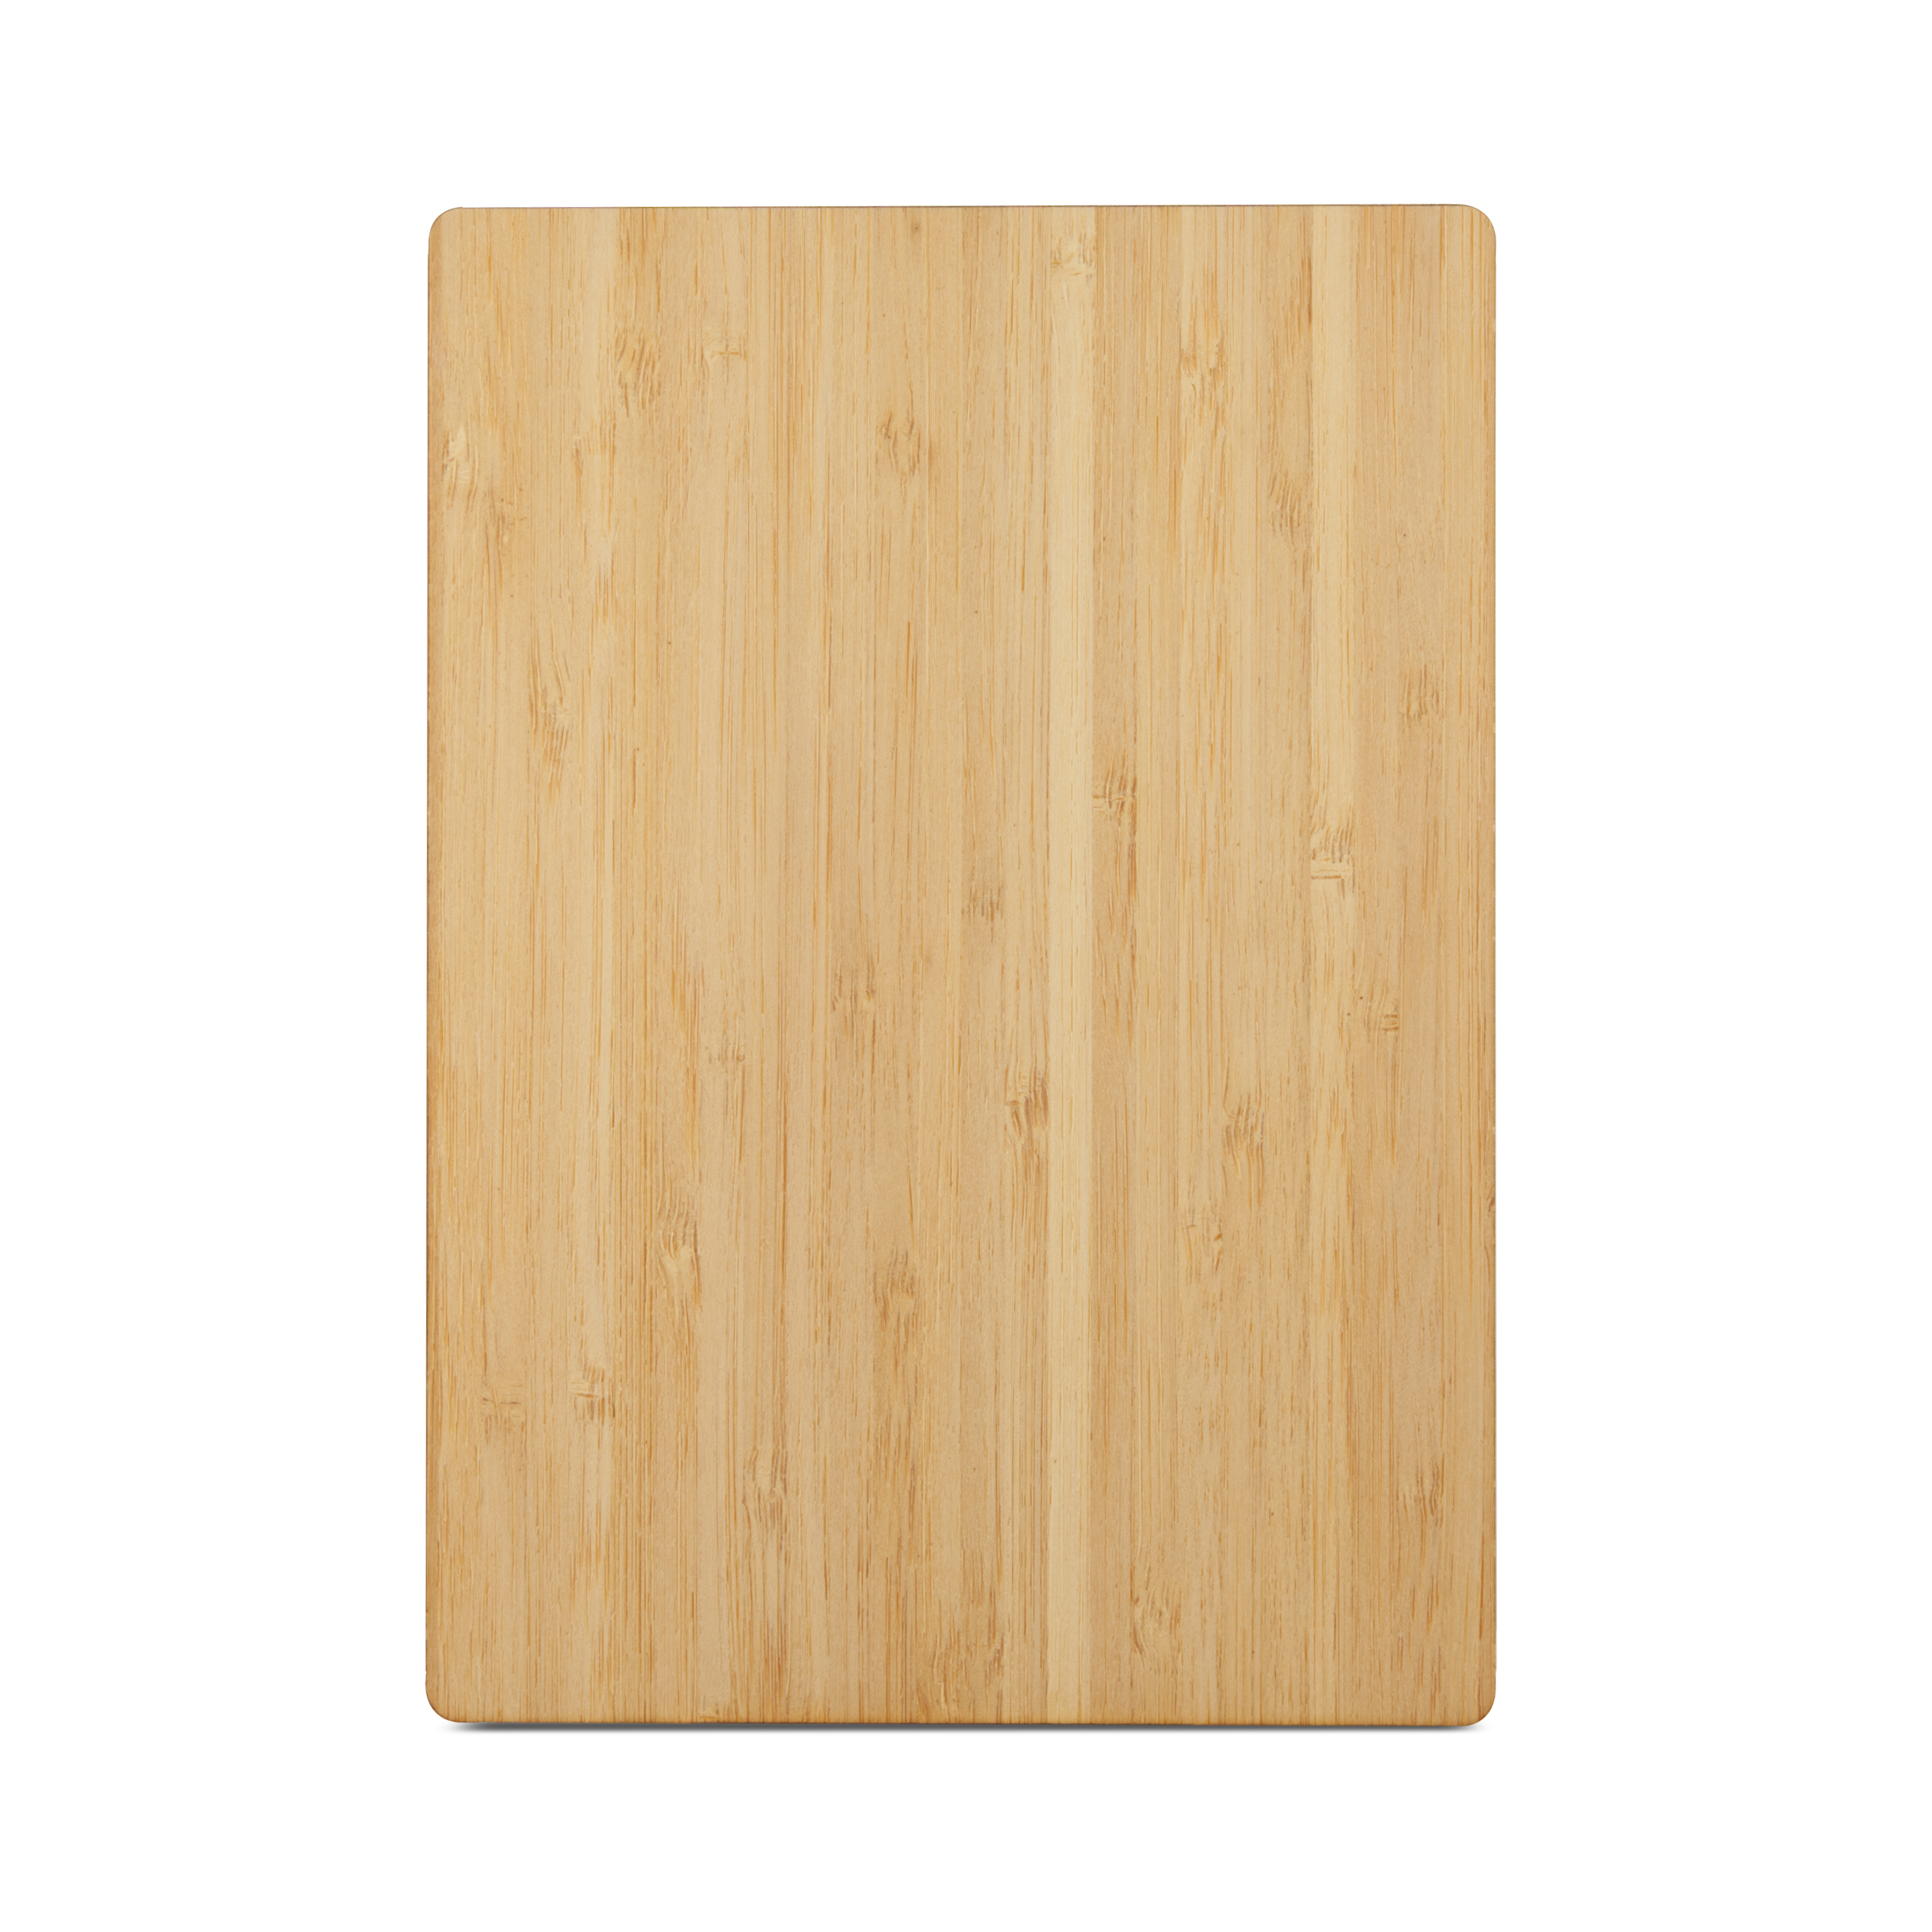 NFC plate bamboo - A5 - NTAG213 - 180 bytes - wood look